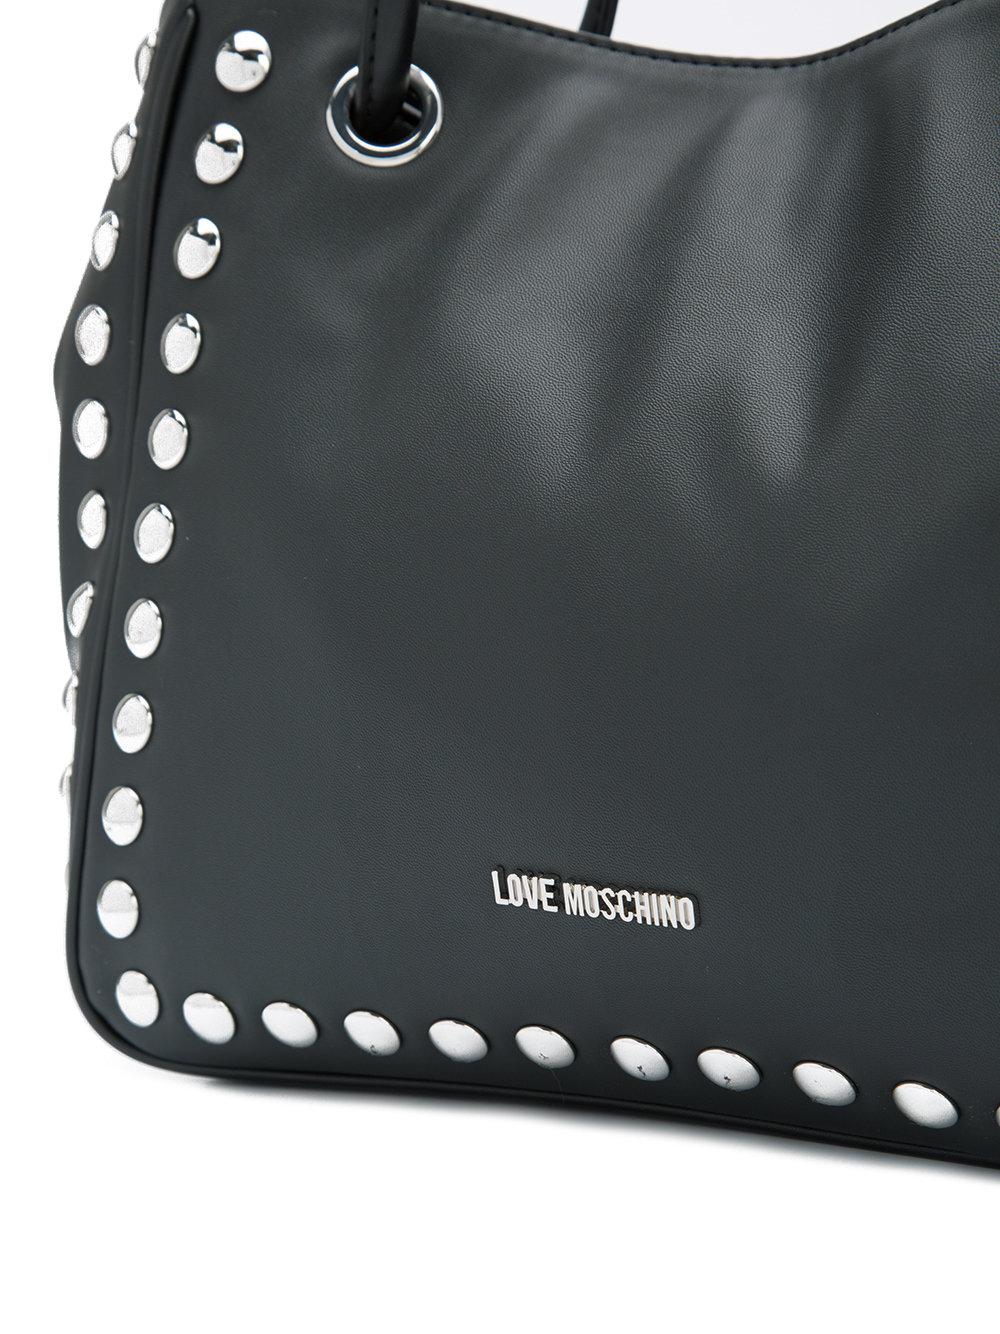 love moschino black studded bag